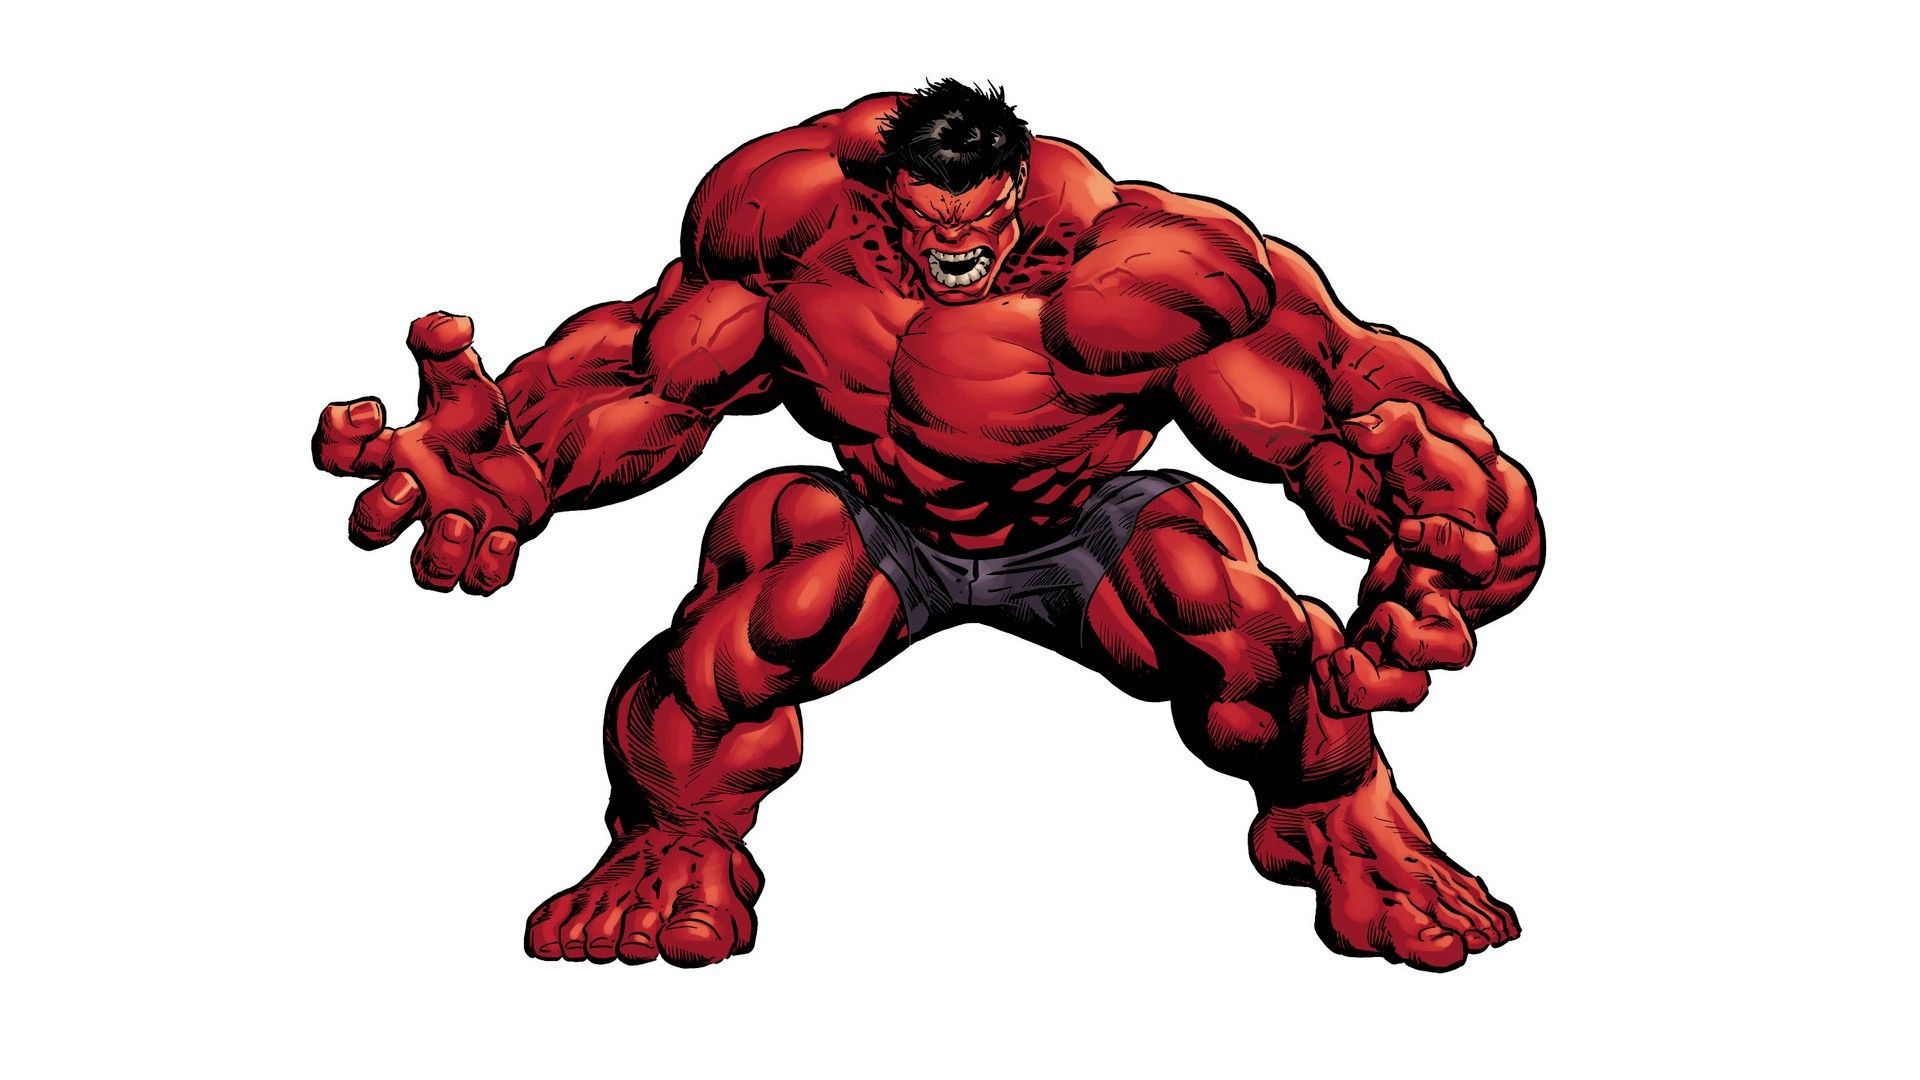 Red Hulk Wallpaper